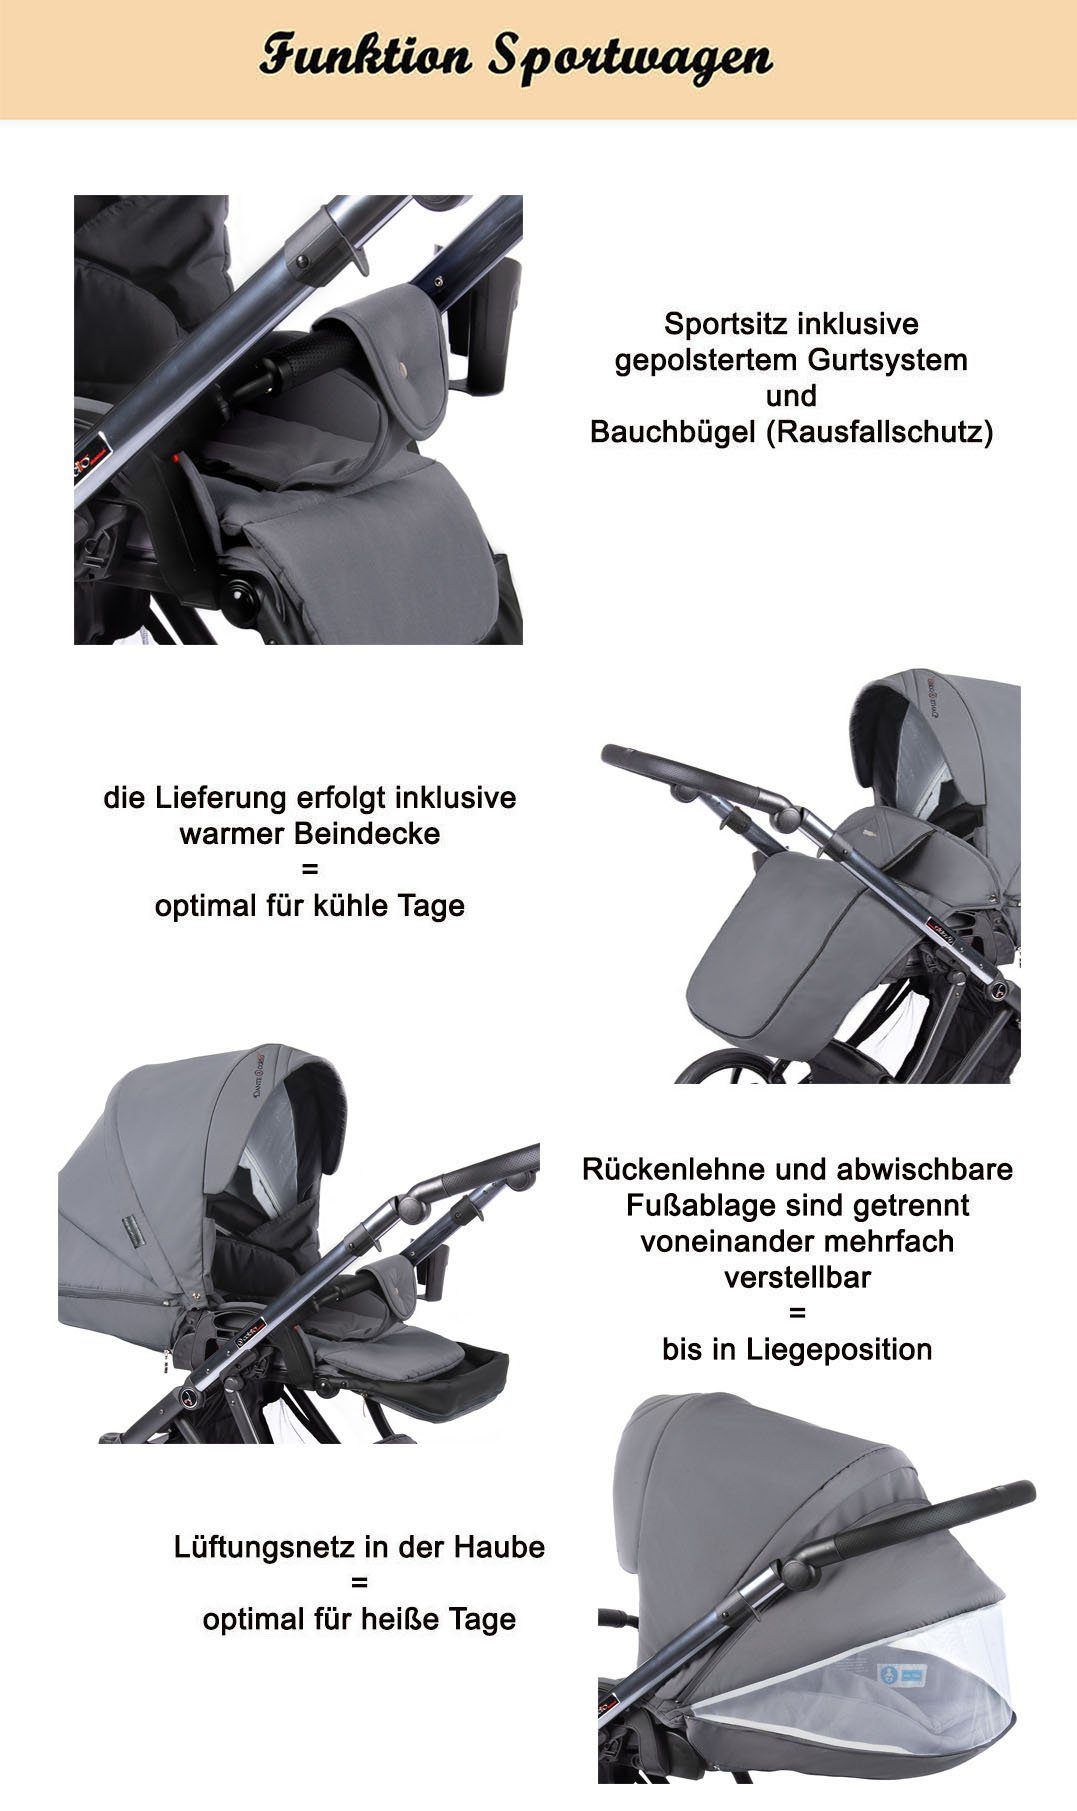 babies-on-wheels Kinderwagen-Set kupfer = - - in Dante 13 Beige 16 in 3 Teile 1 Farben Gestell Kombi-Kinderwagen